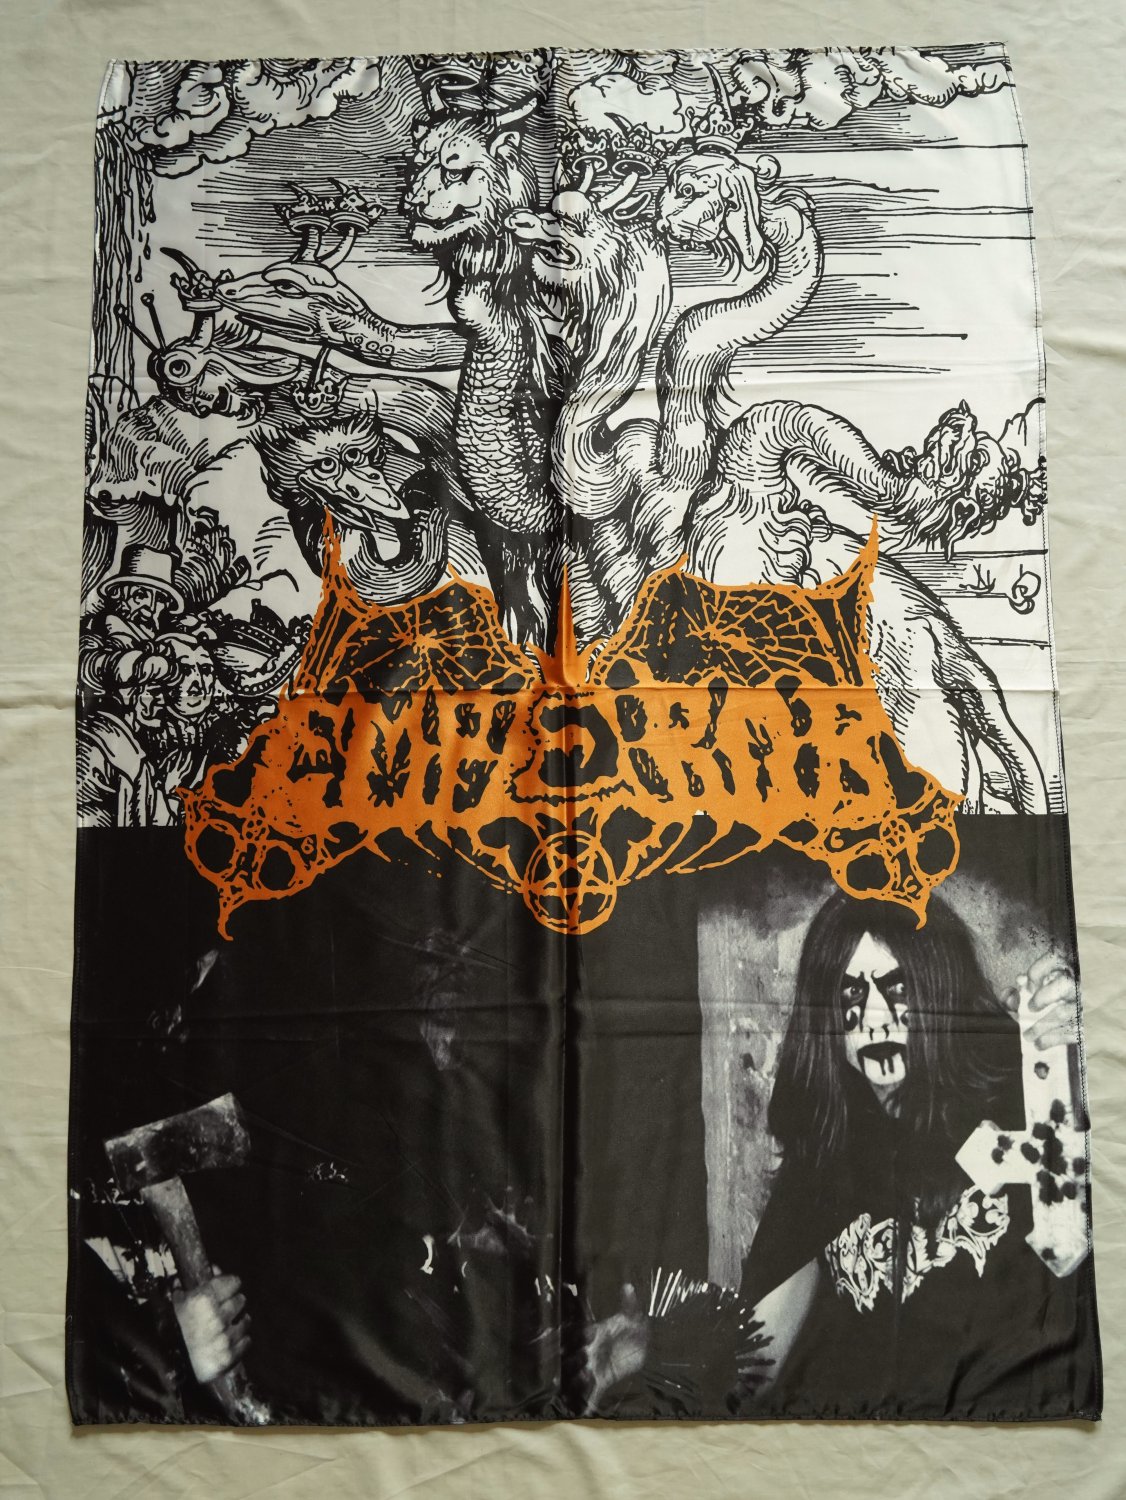 EMPEROR - Wrath of the tyrant FLAG cloth poster banner Black METAL Burzum